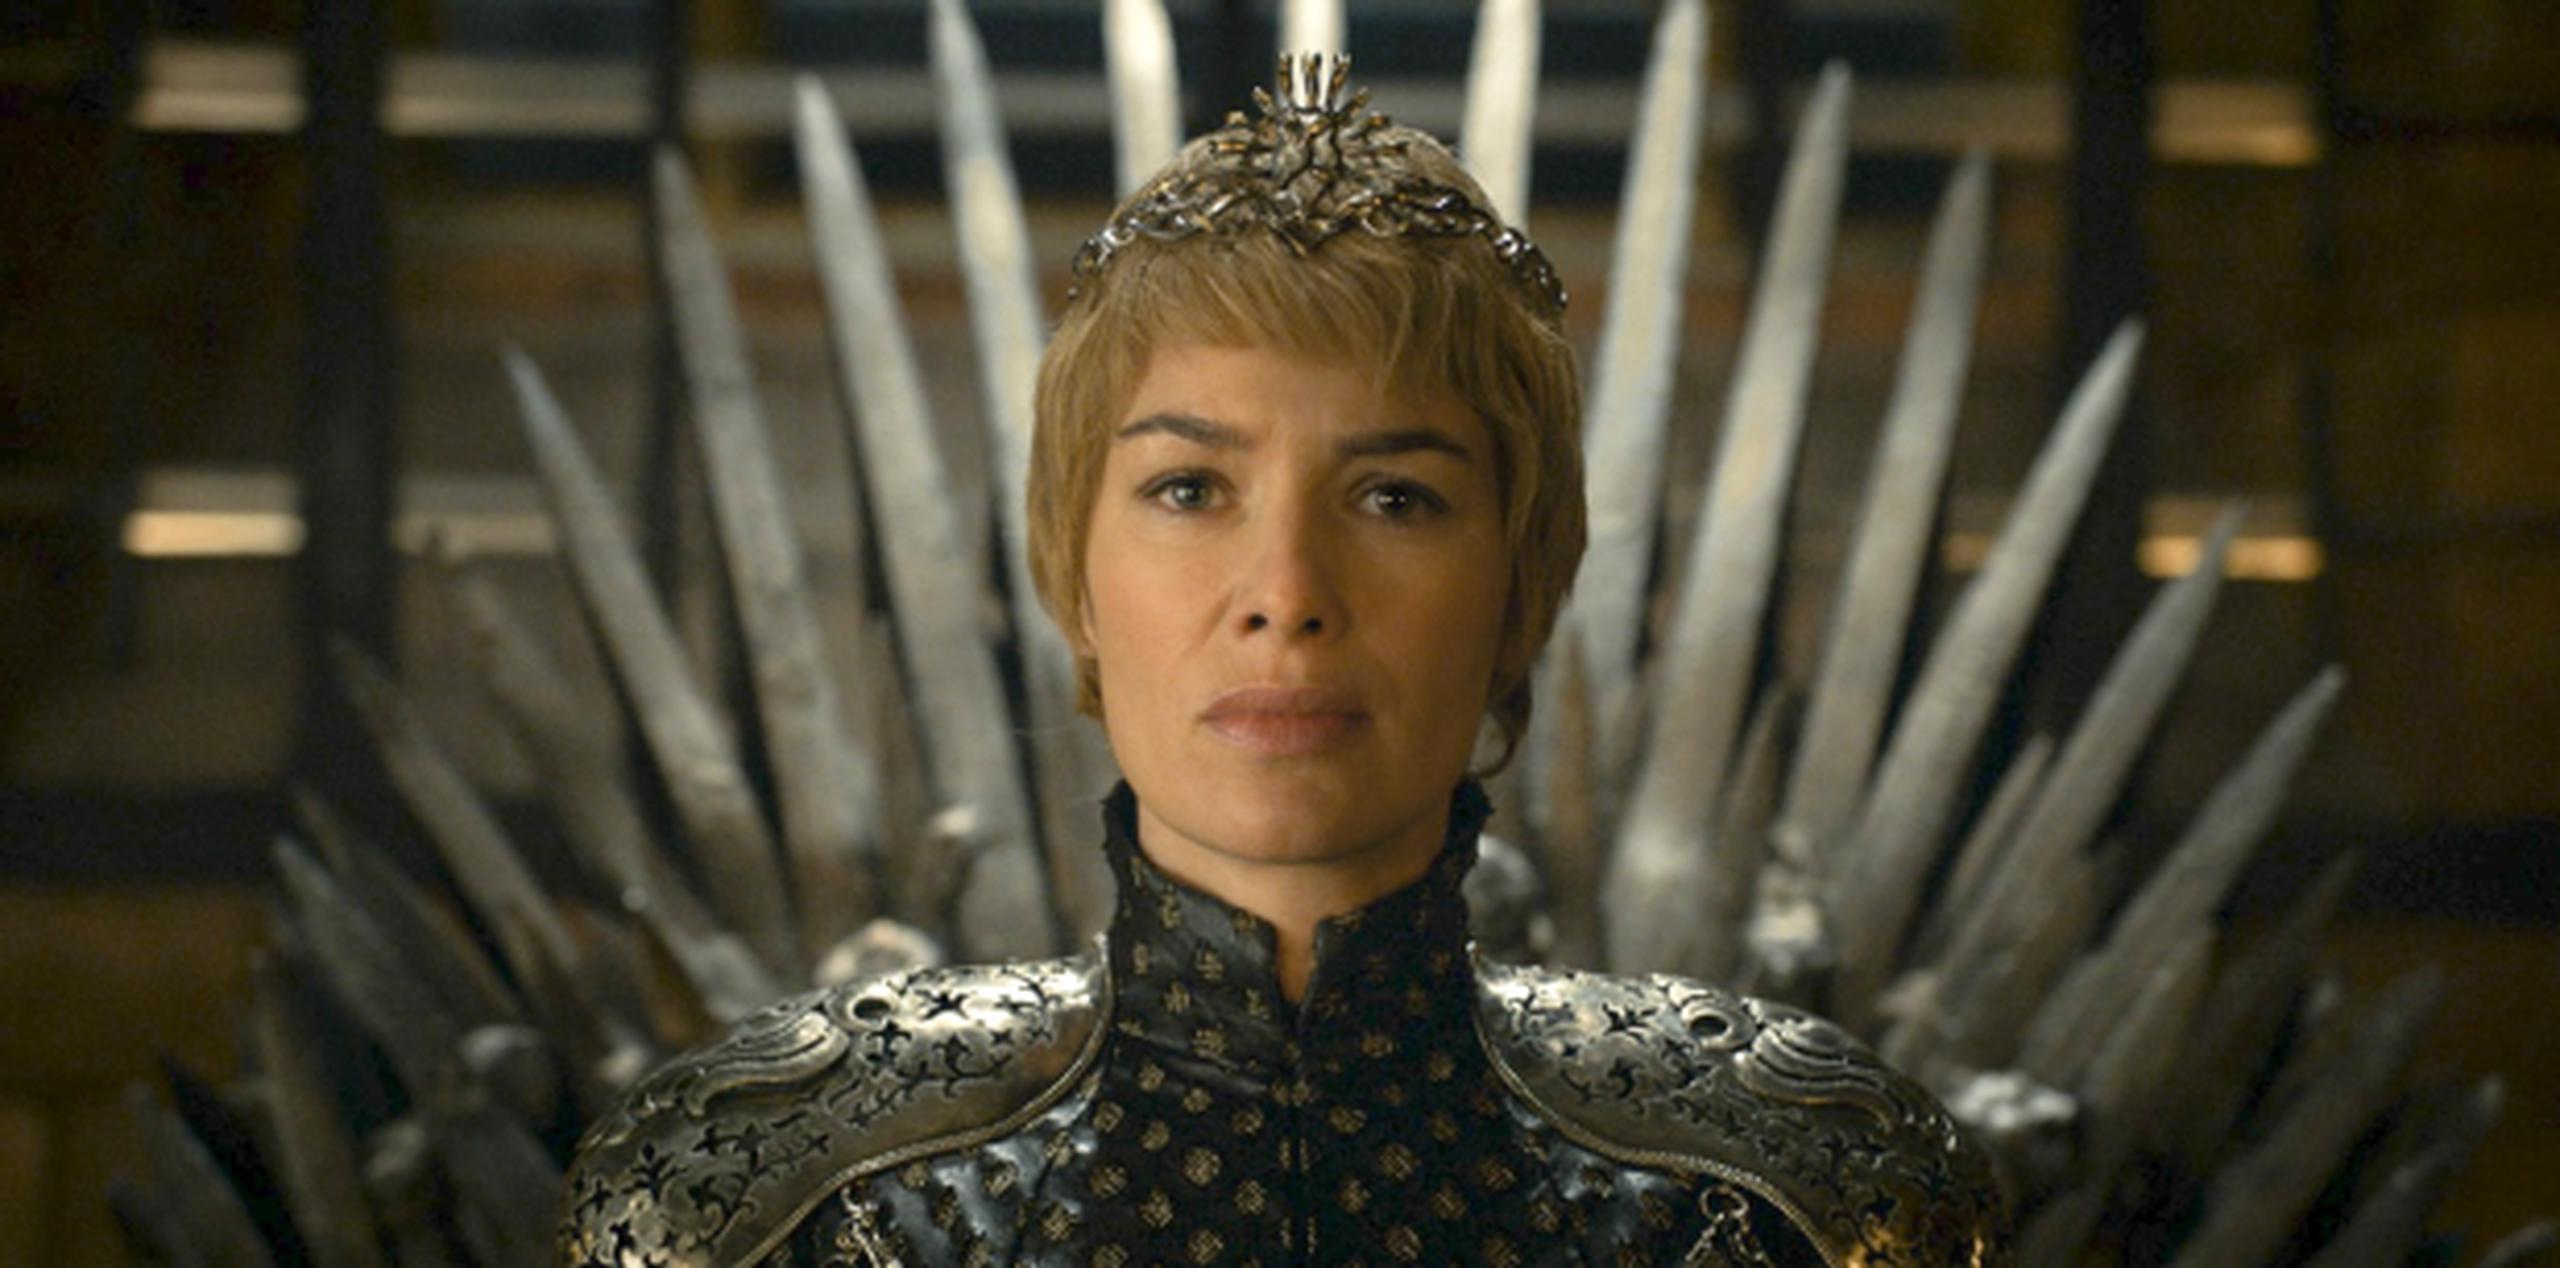 La actriz inglesa Lena Headey interpreta a Cersei Lannister en la serie. (Archivo)